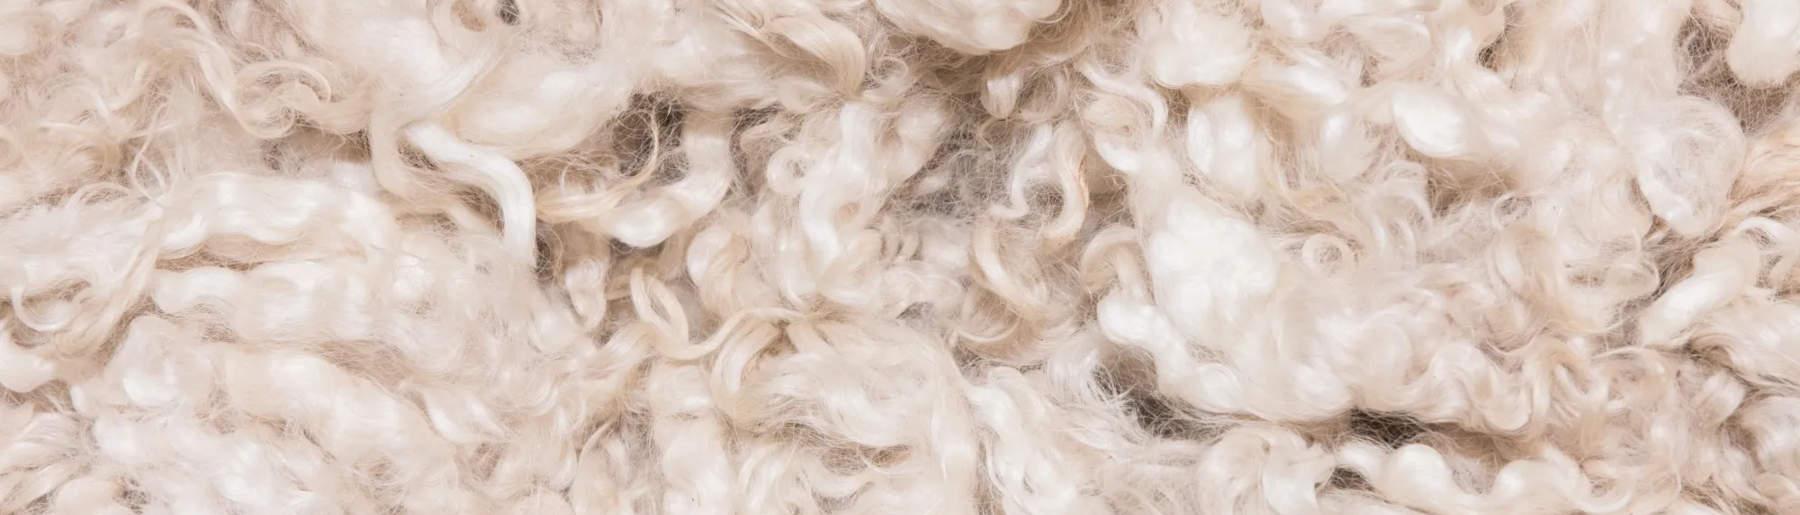 close up image of raw merino wool